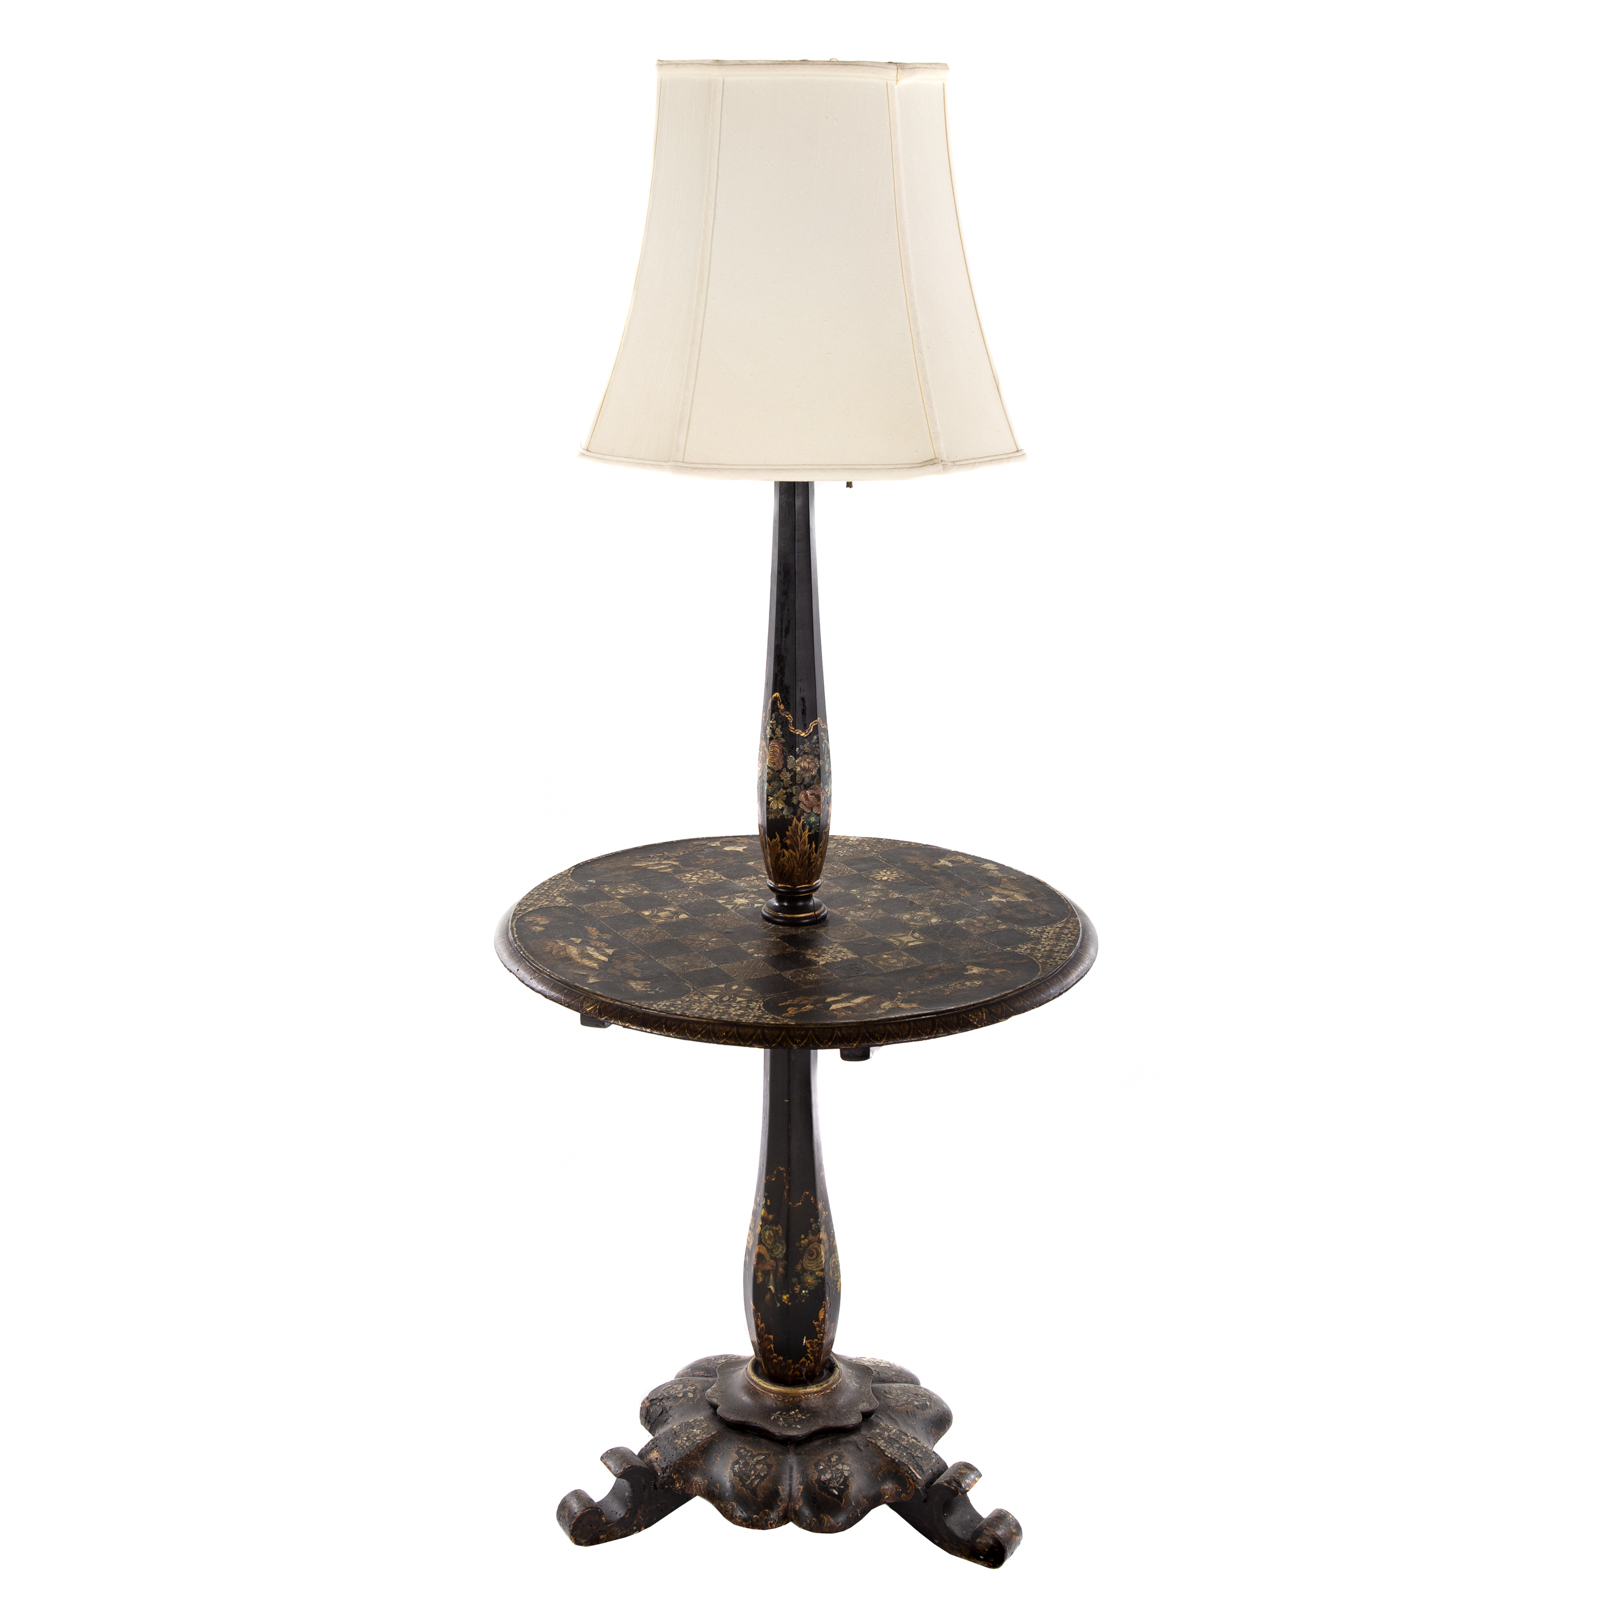 EDWARDIAN STYLE LAMP TABLE Circa 369577